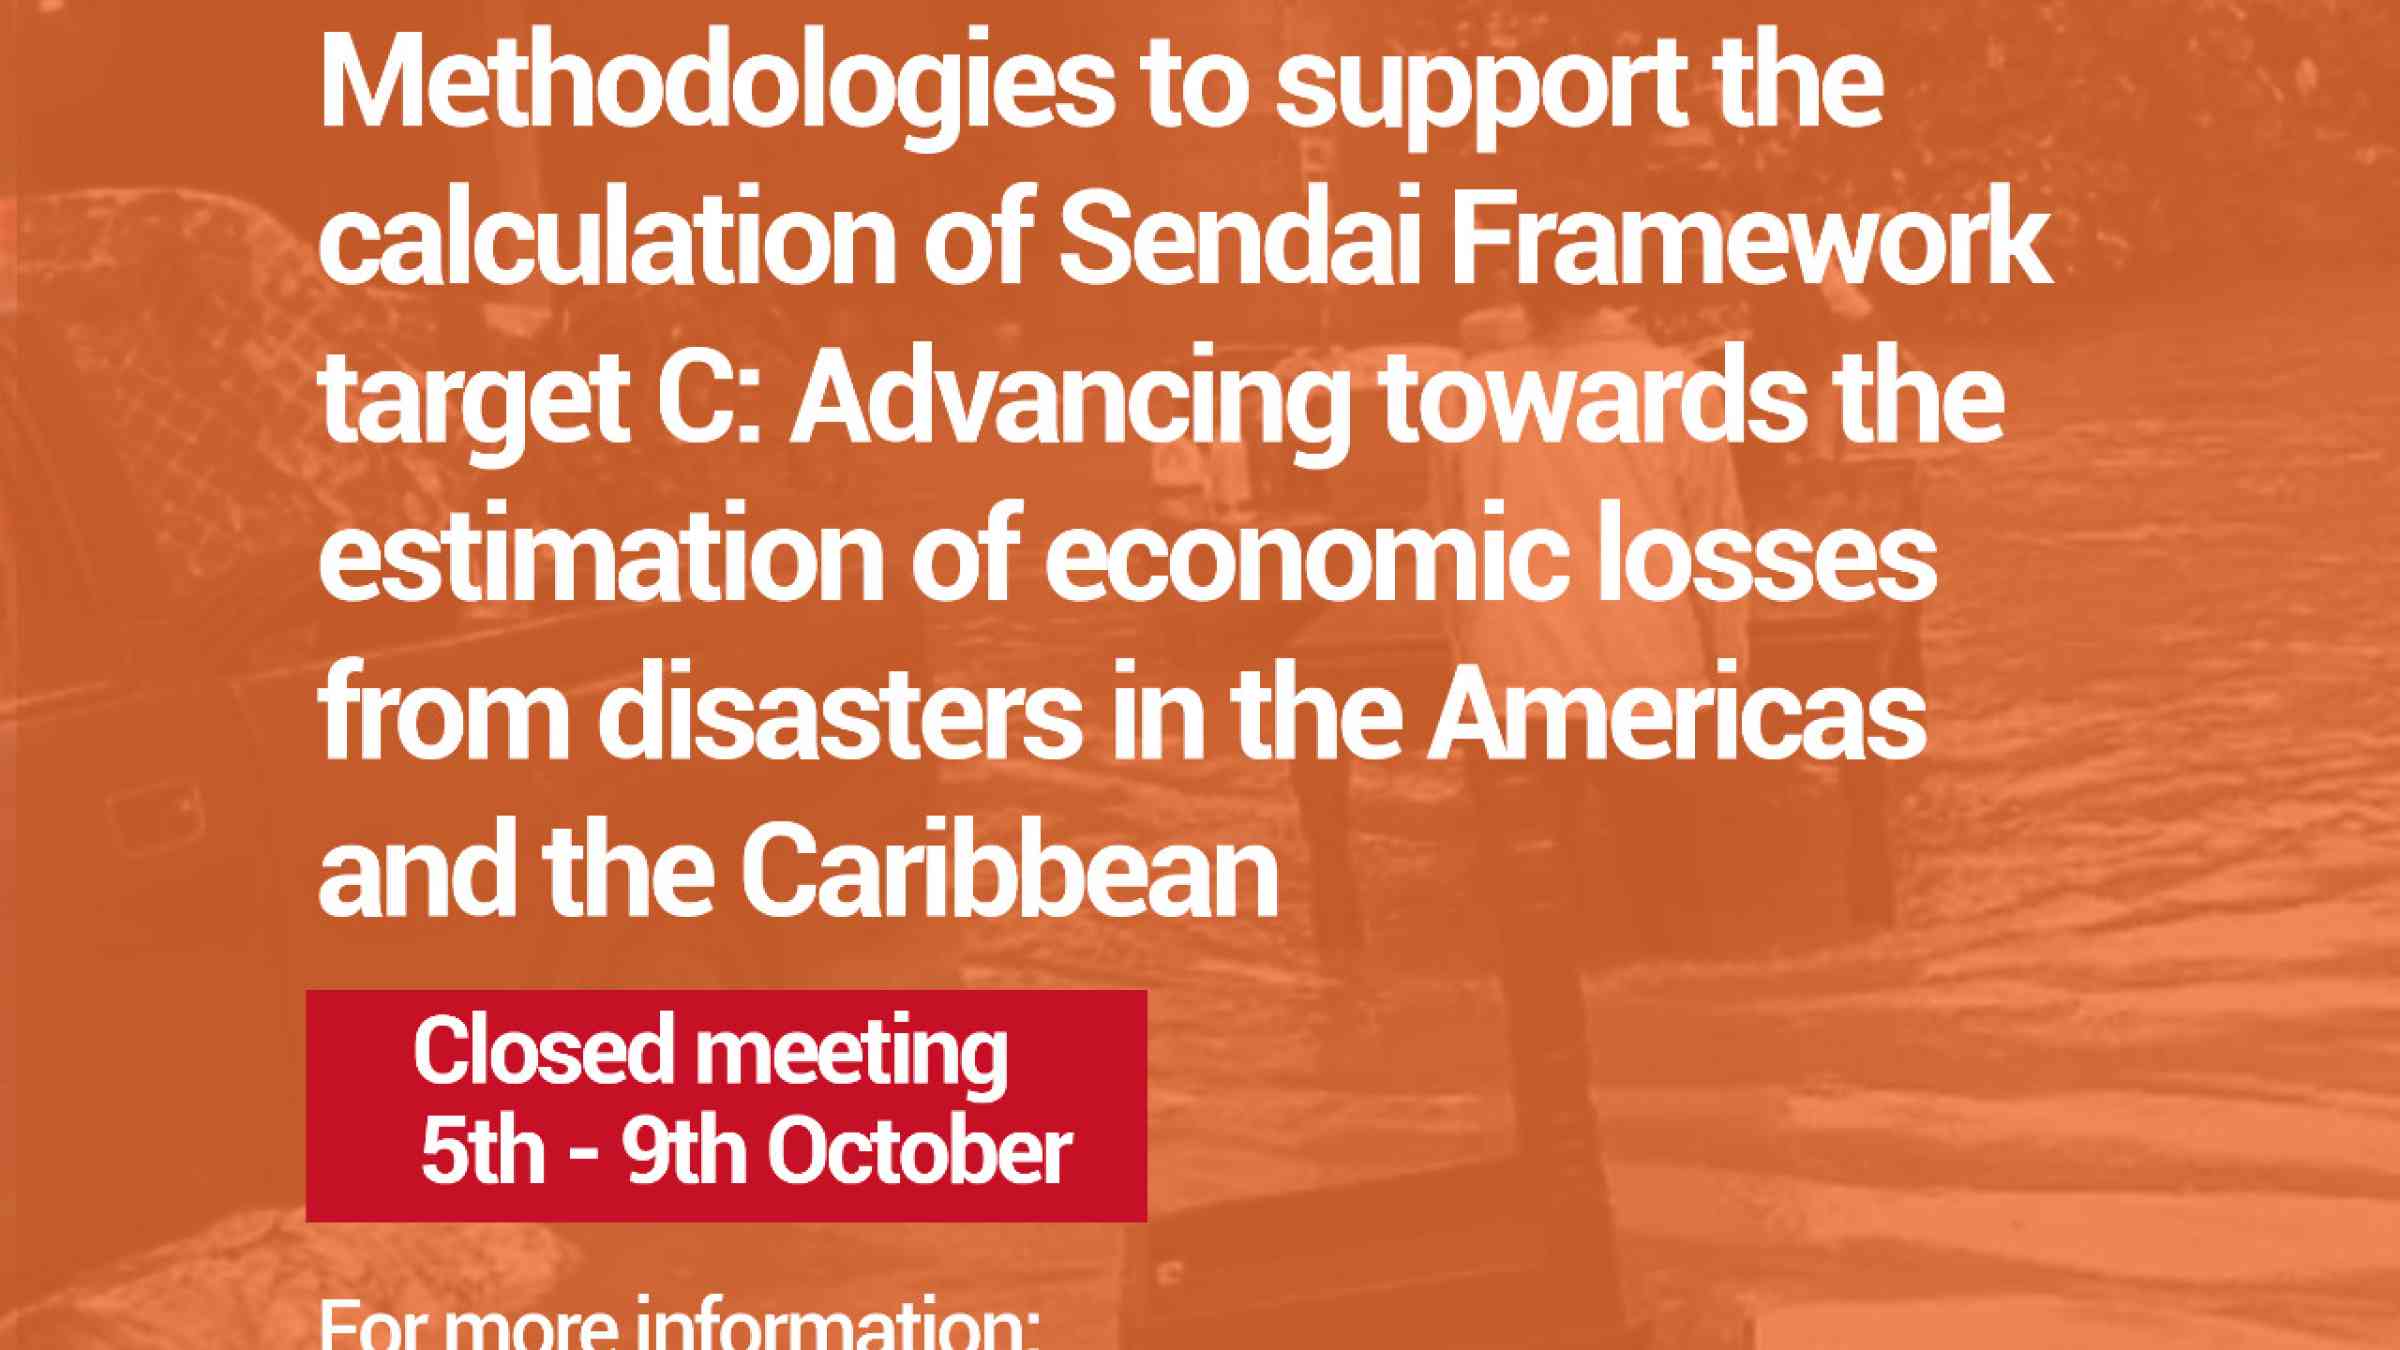 Methodologies to support the calculation of Sendai Framework target C